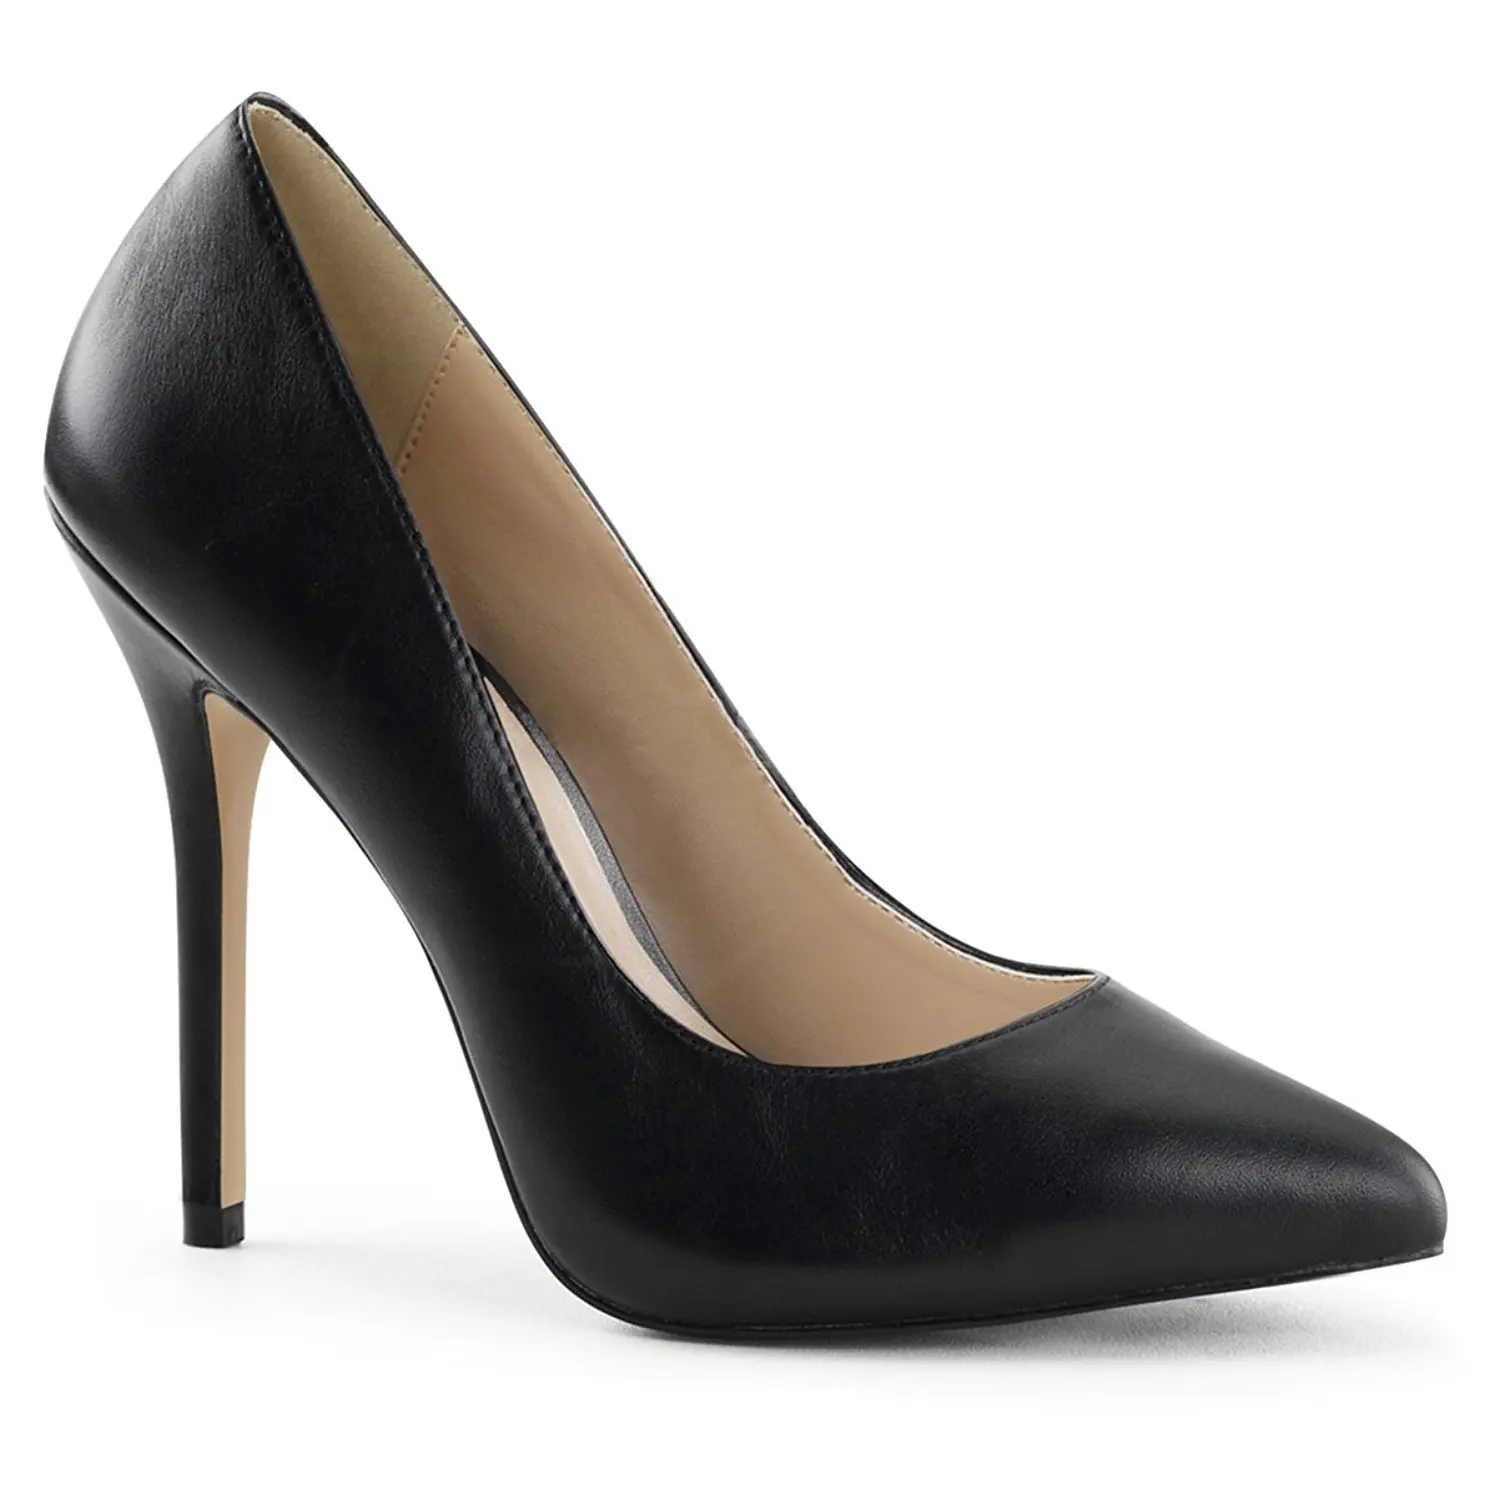 3 inch black heels